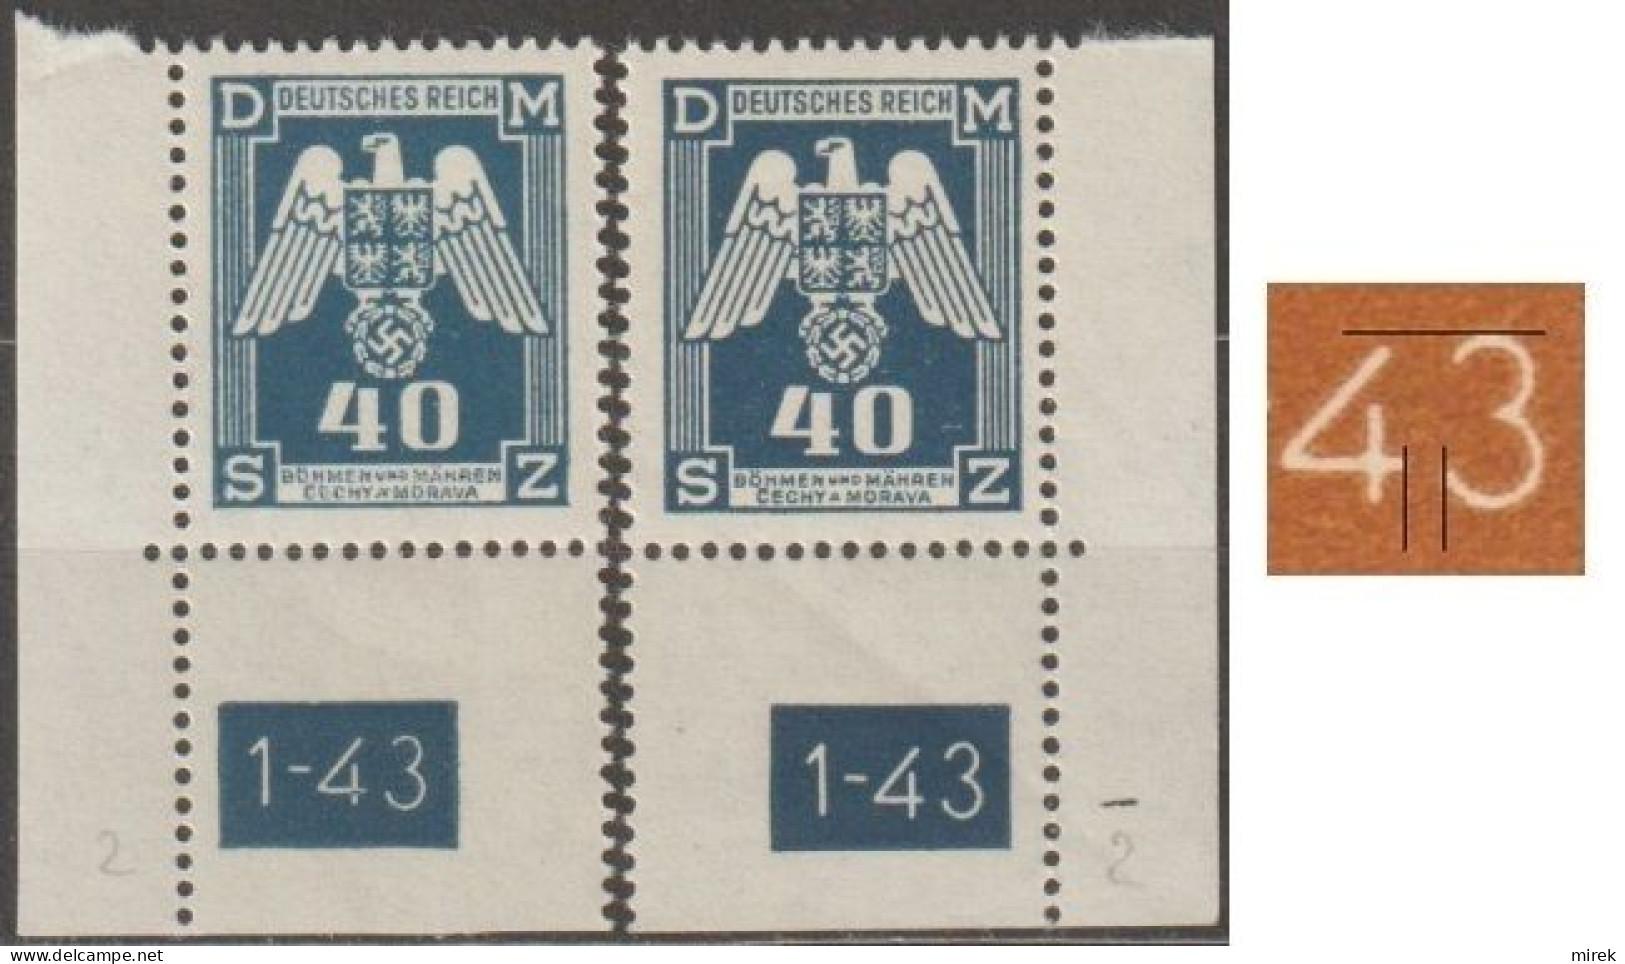 027/ Pof. SL 14, Corner Stamps, Plate Number 1-43, Type 2, Var. 2 - Unused Stamps